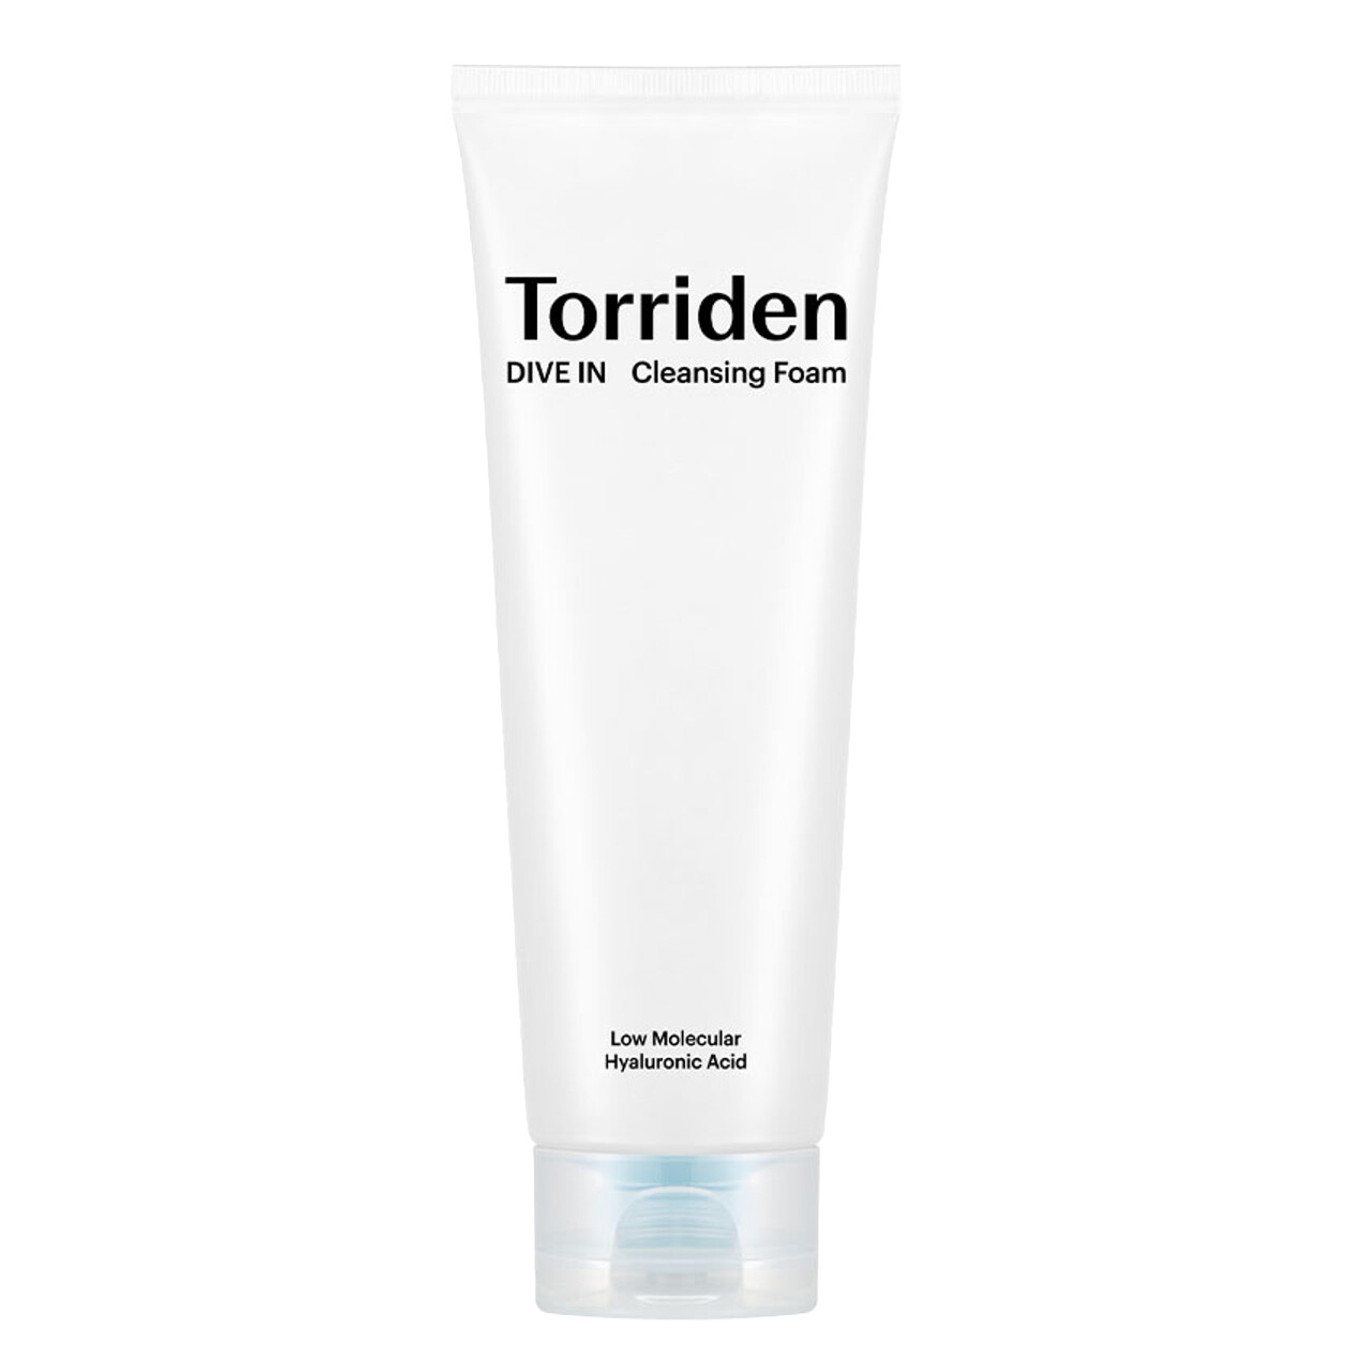 TORRIDEN DIVE IN Low Molecular Hyaluronic Acid Cleansing Foam (5.07 oz)